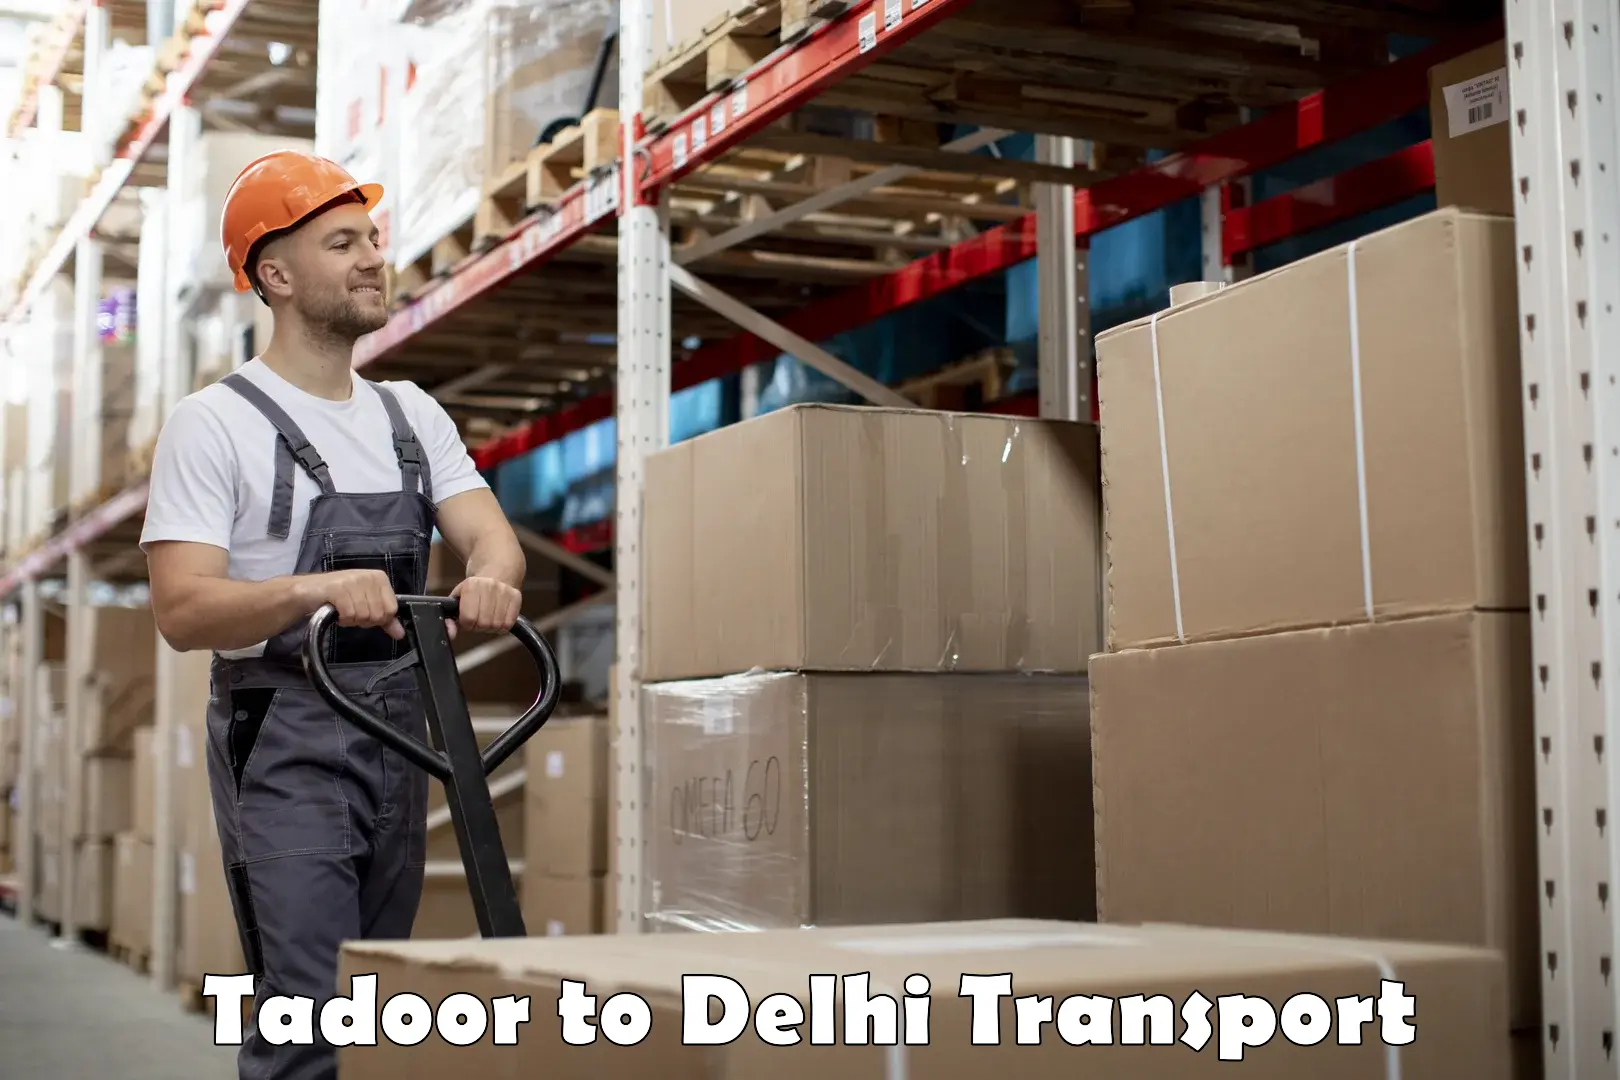 Daily transport service Tadoor to East Delhi